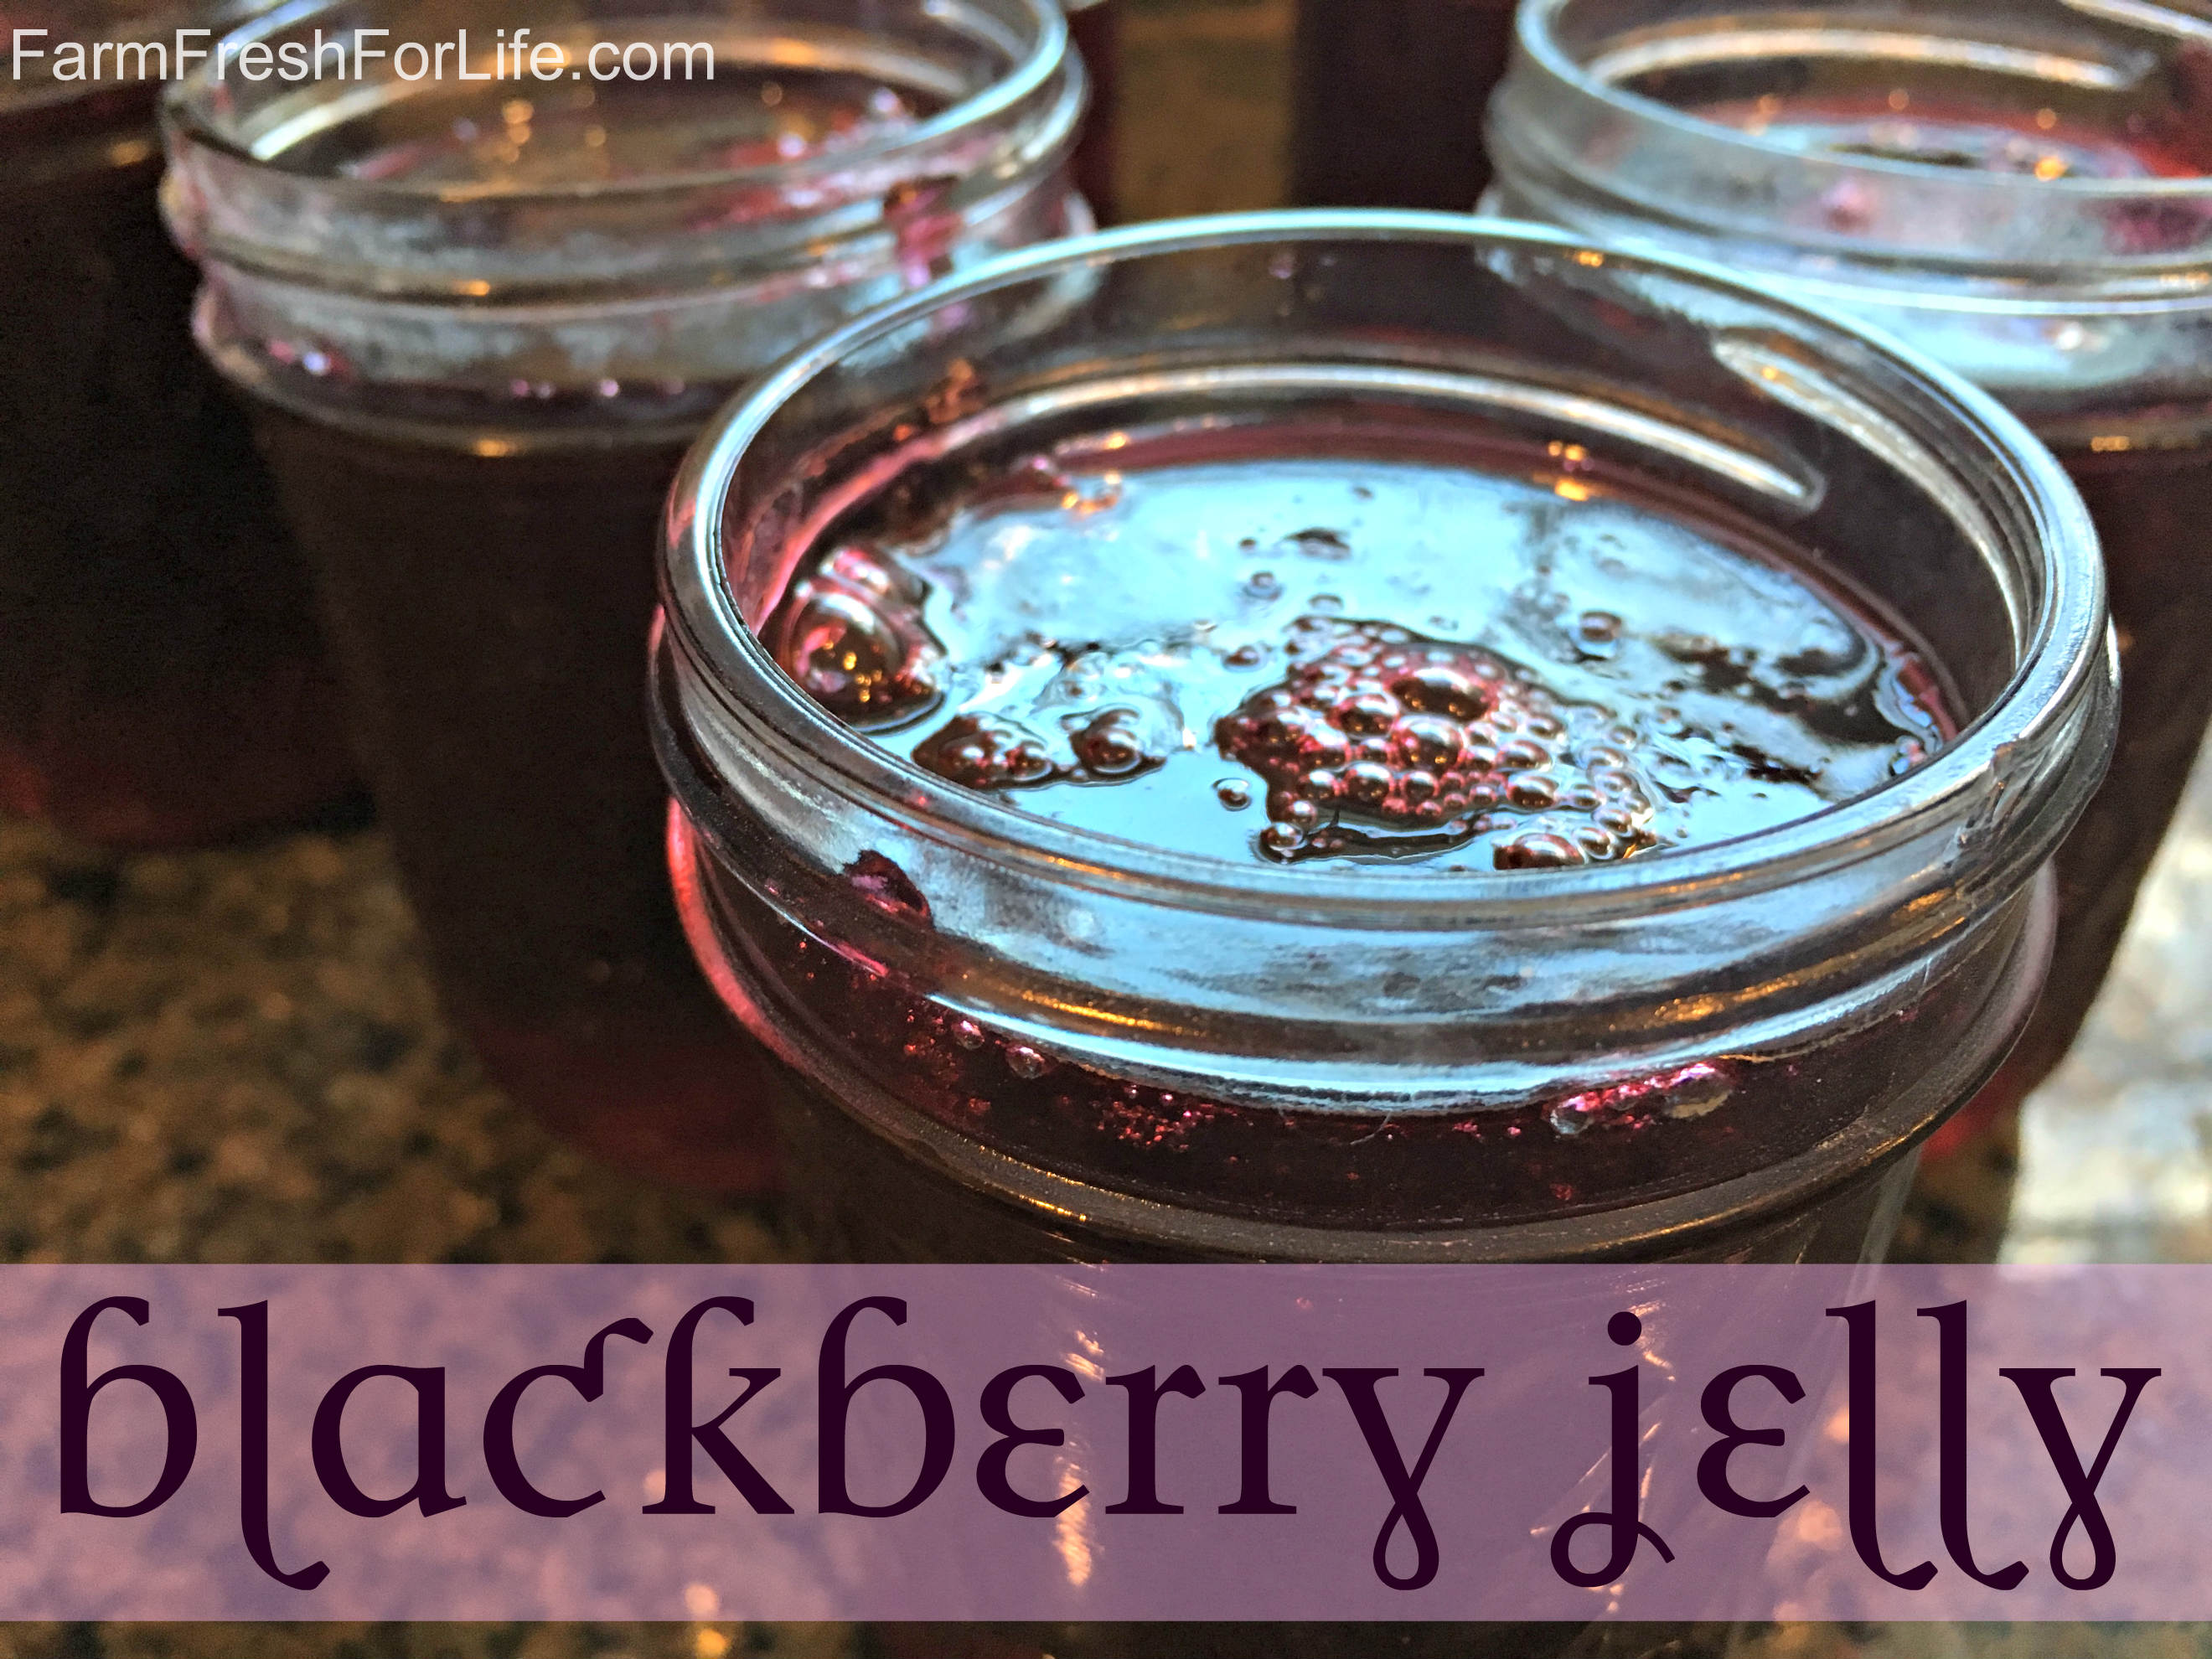 How to Make Jelly: 7 Easy Homemade Jelly Recipes